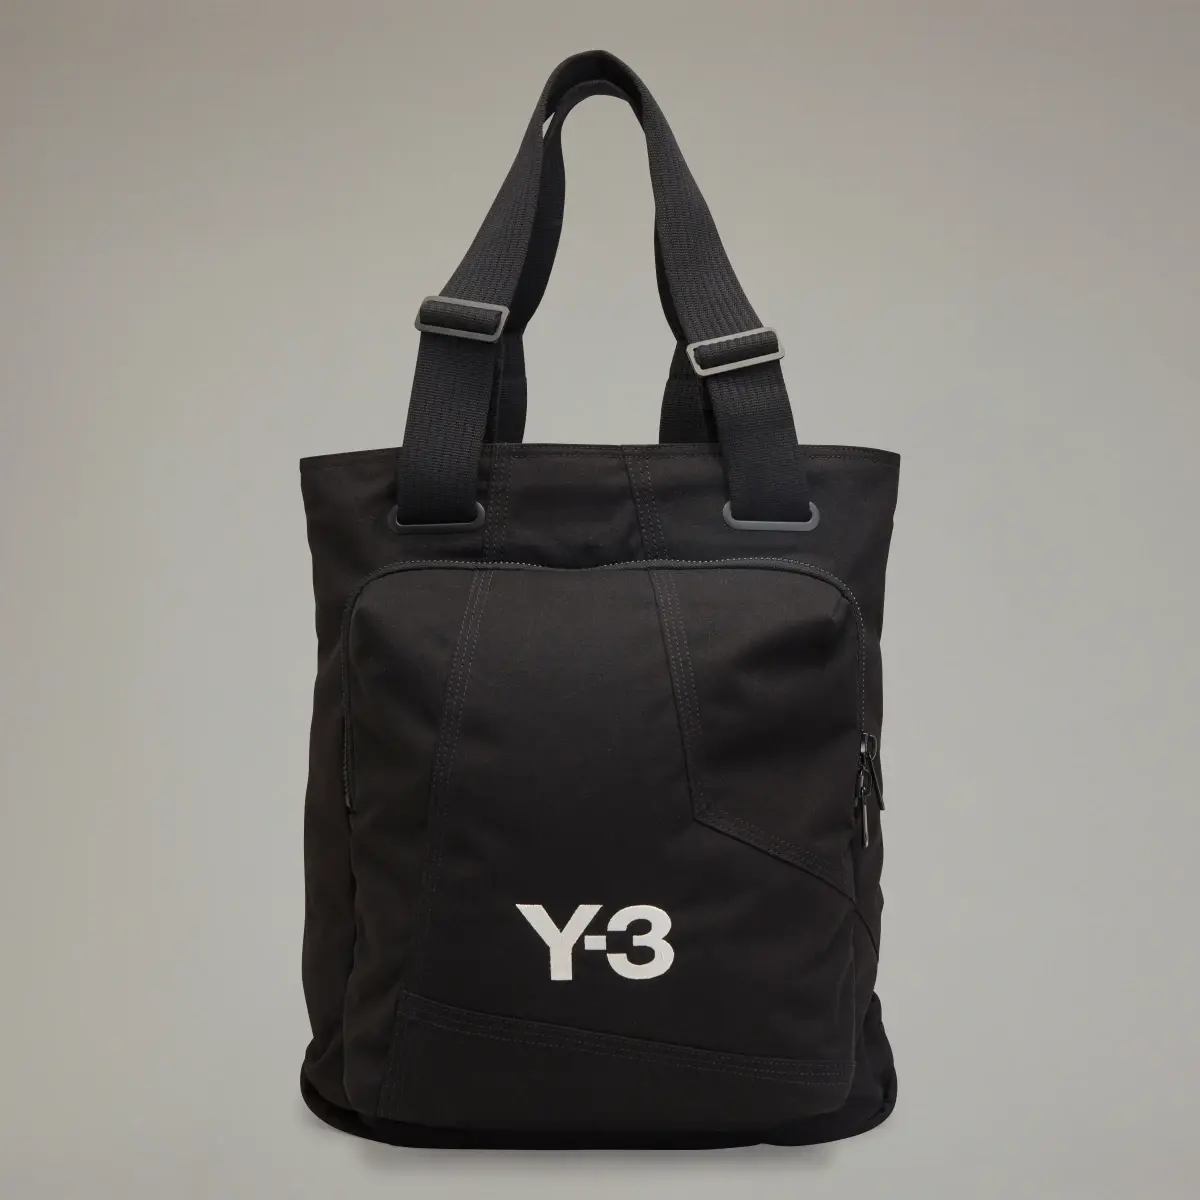 Adidas Tote bag Y-3 Classic. 2